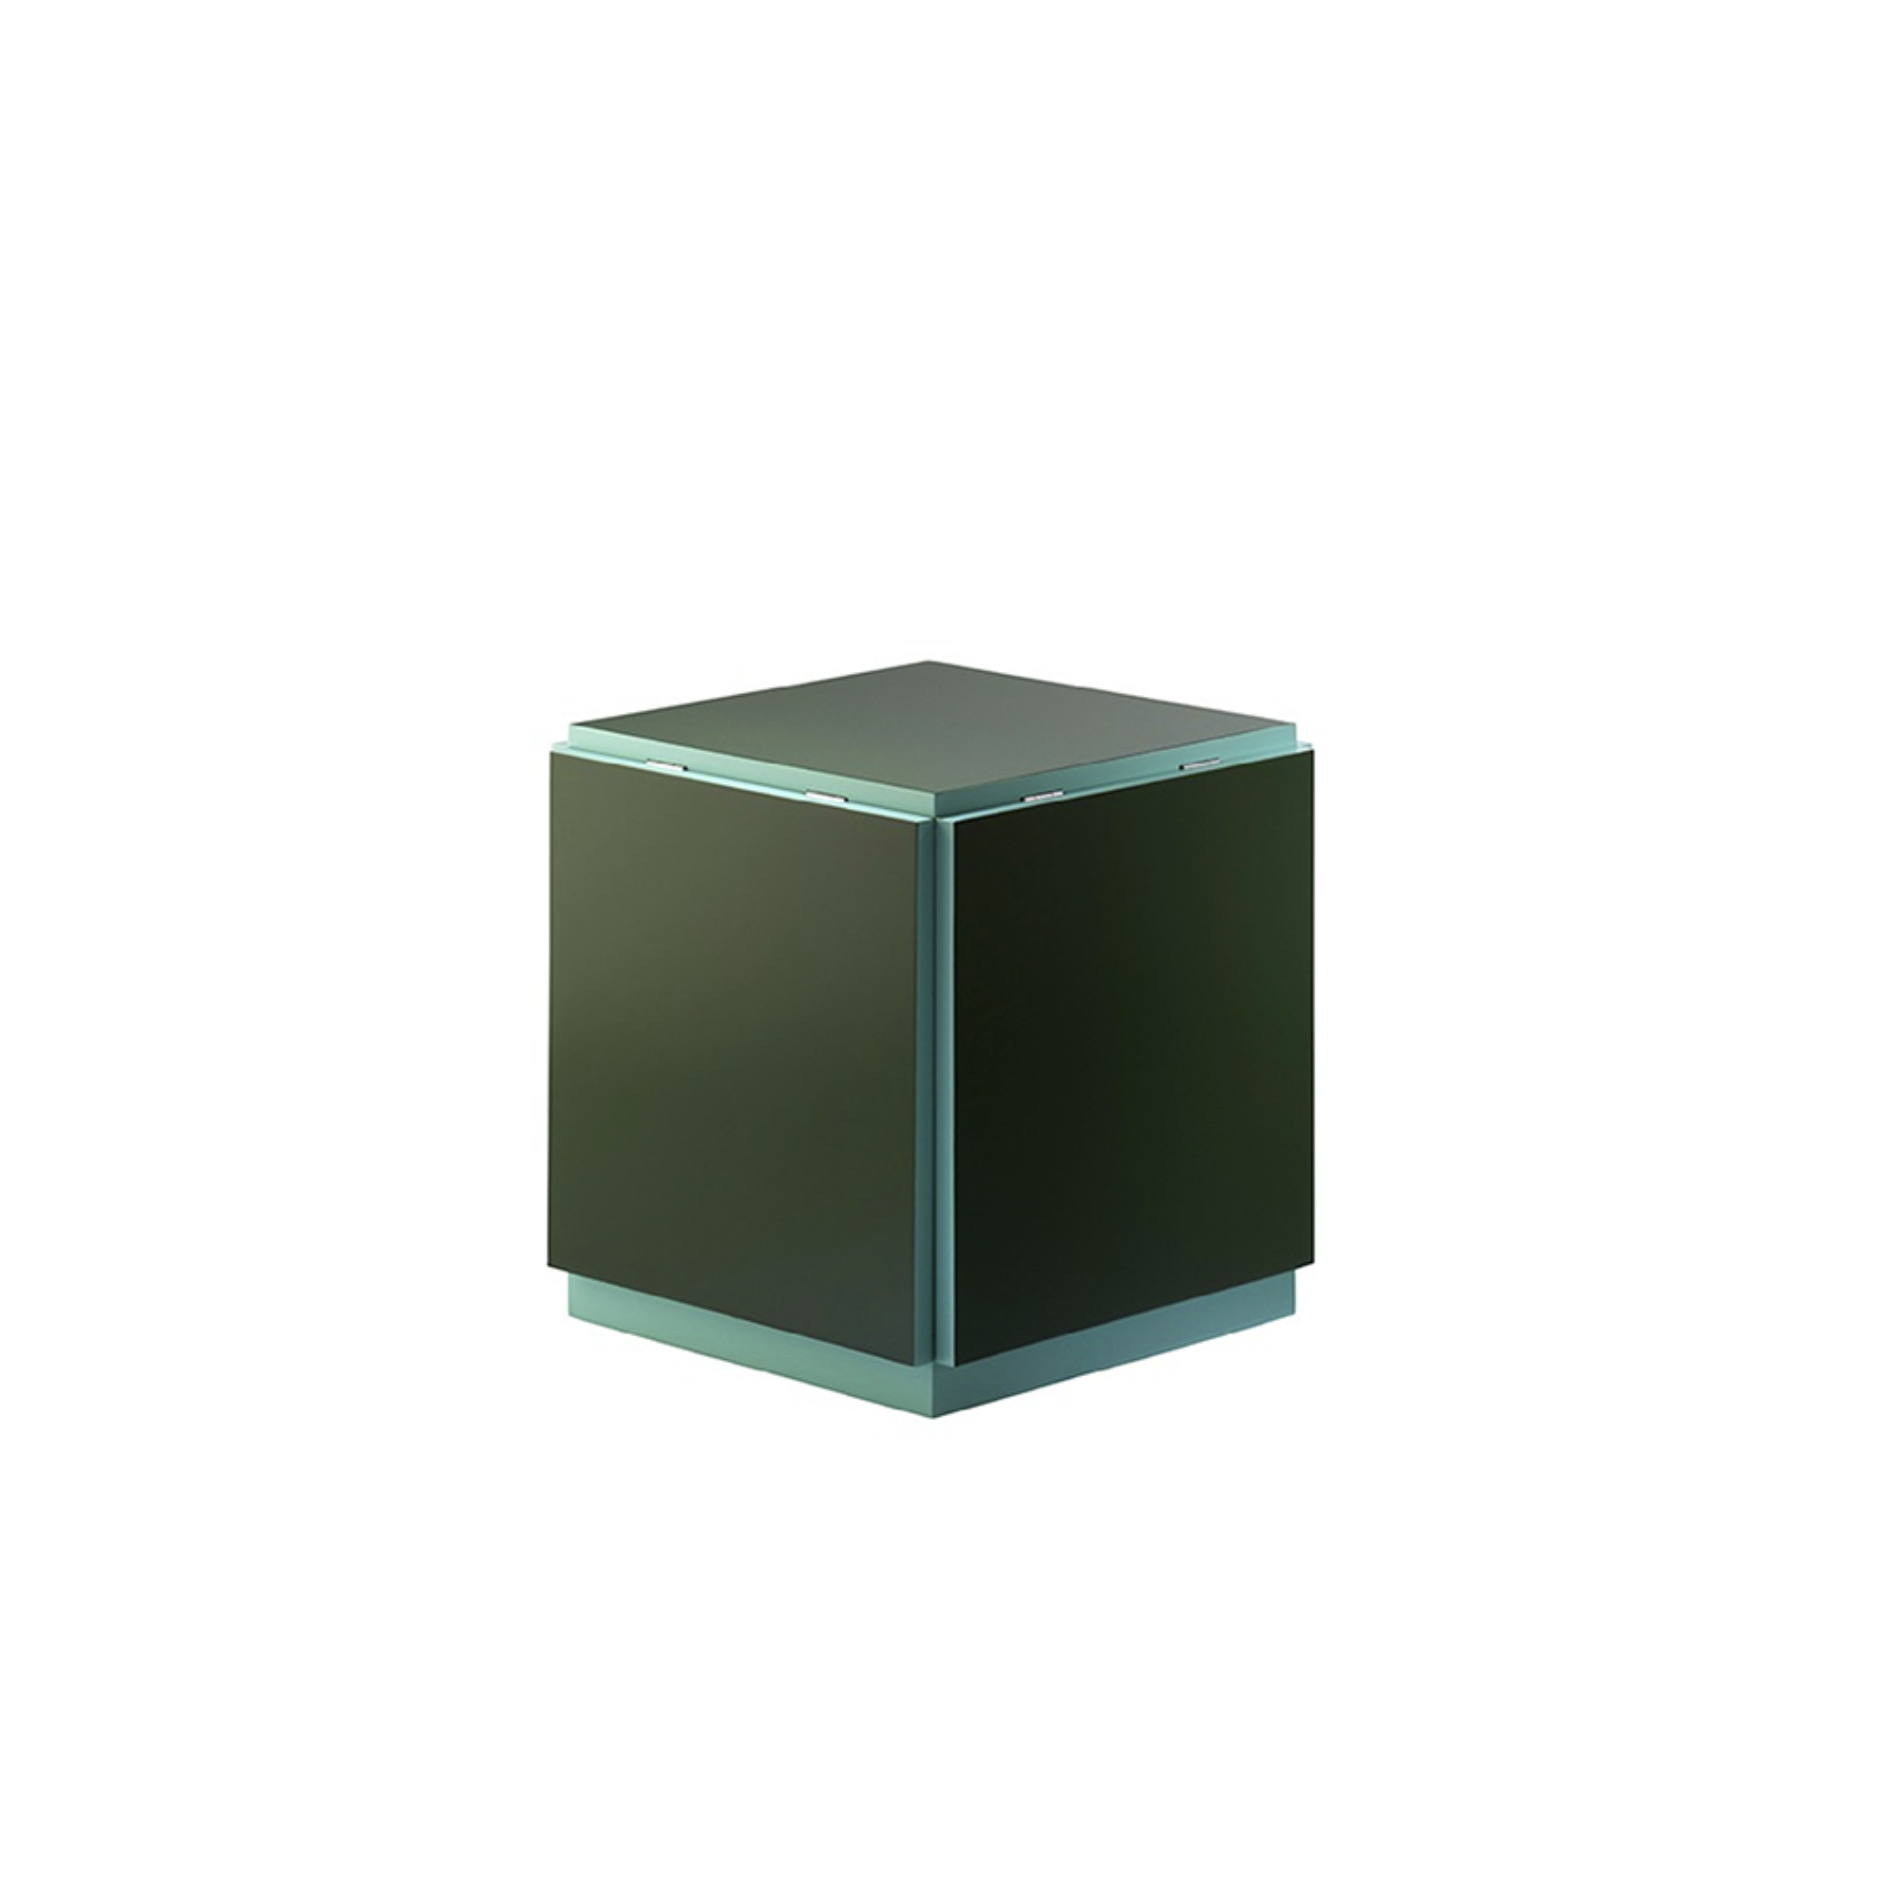 TECTA K10N Table Ver 4 Edition - Design 3 Green